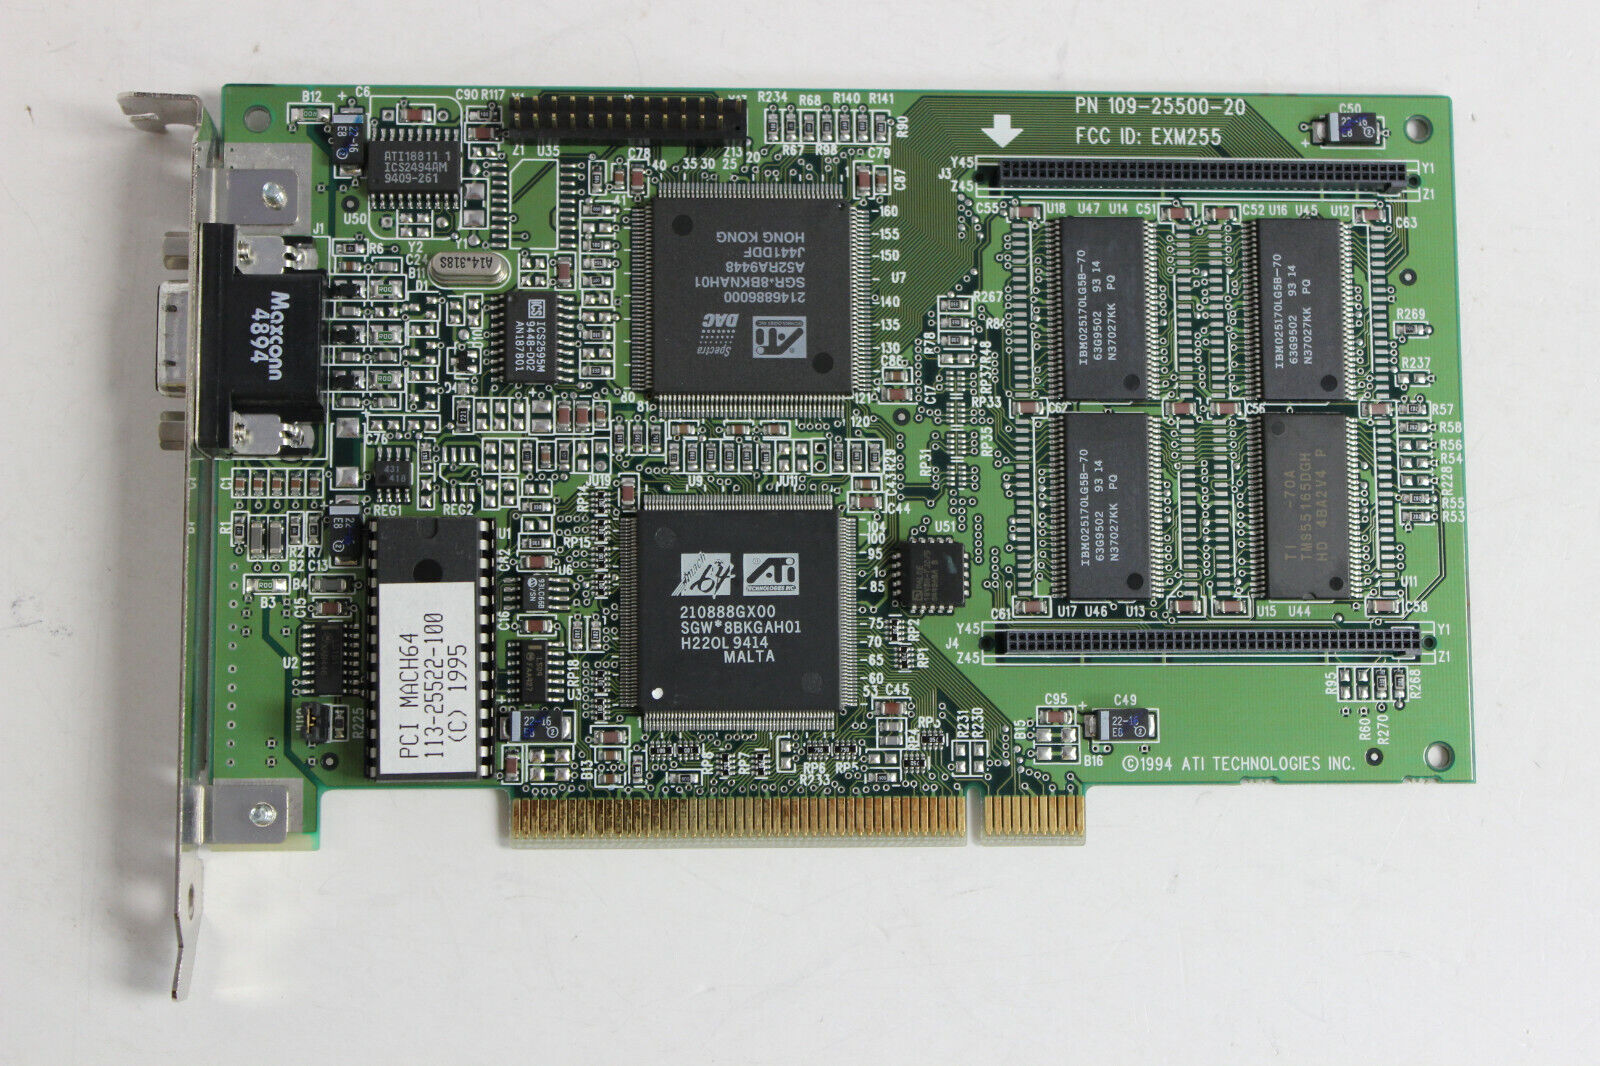 ATI 102-25537-20 PCI MACH64 PCI VIDEO ADAPTER 109-25500-20 W/WARRANTY